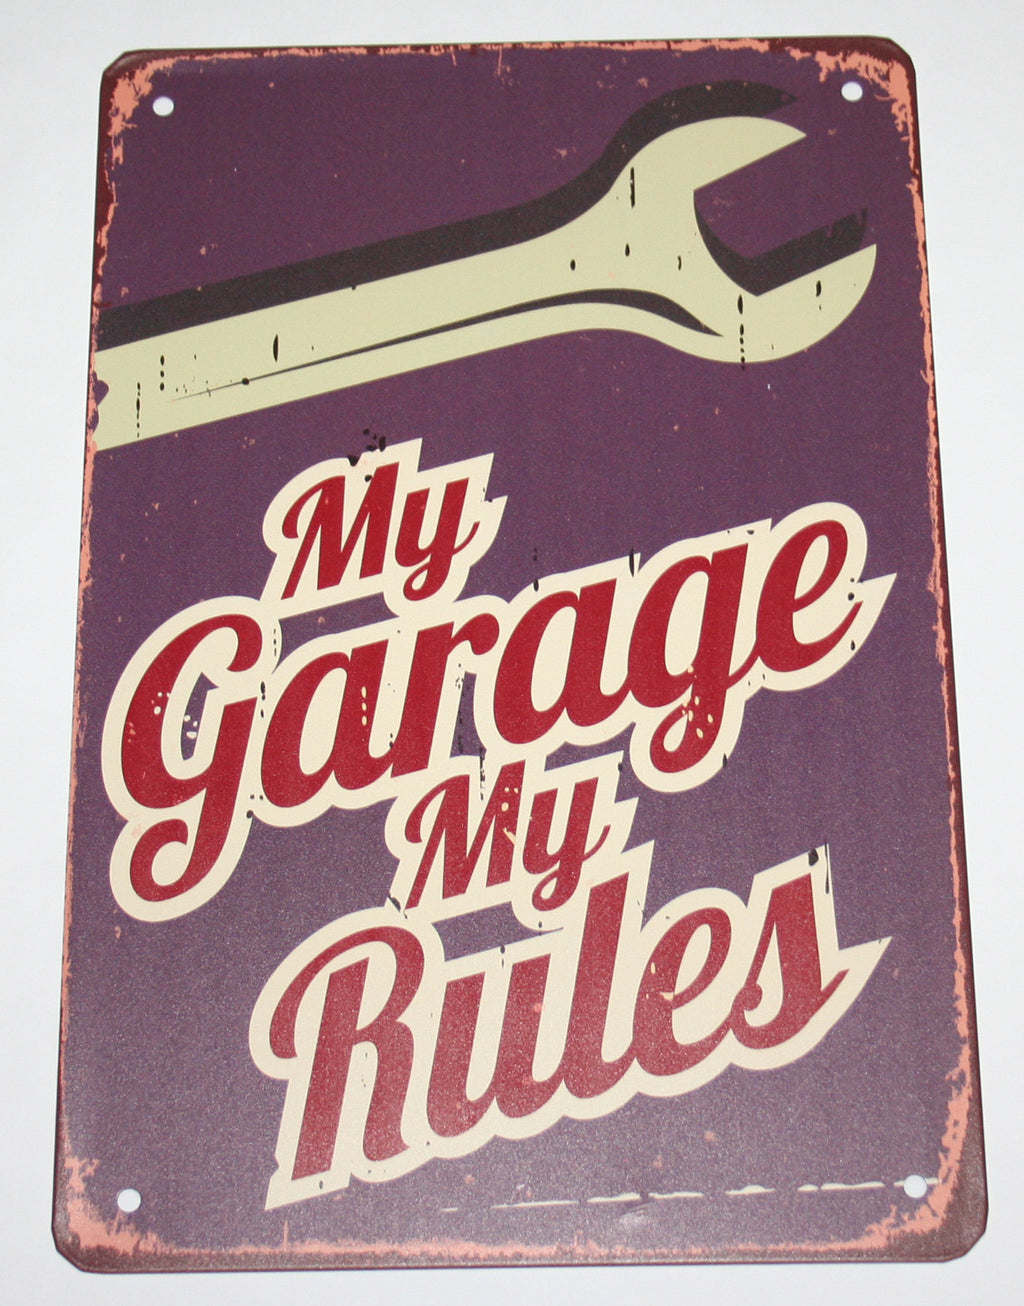 My Garage Mine regler - Blikskilt